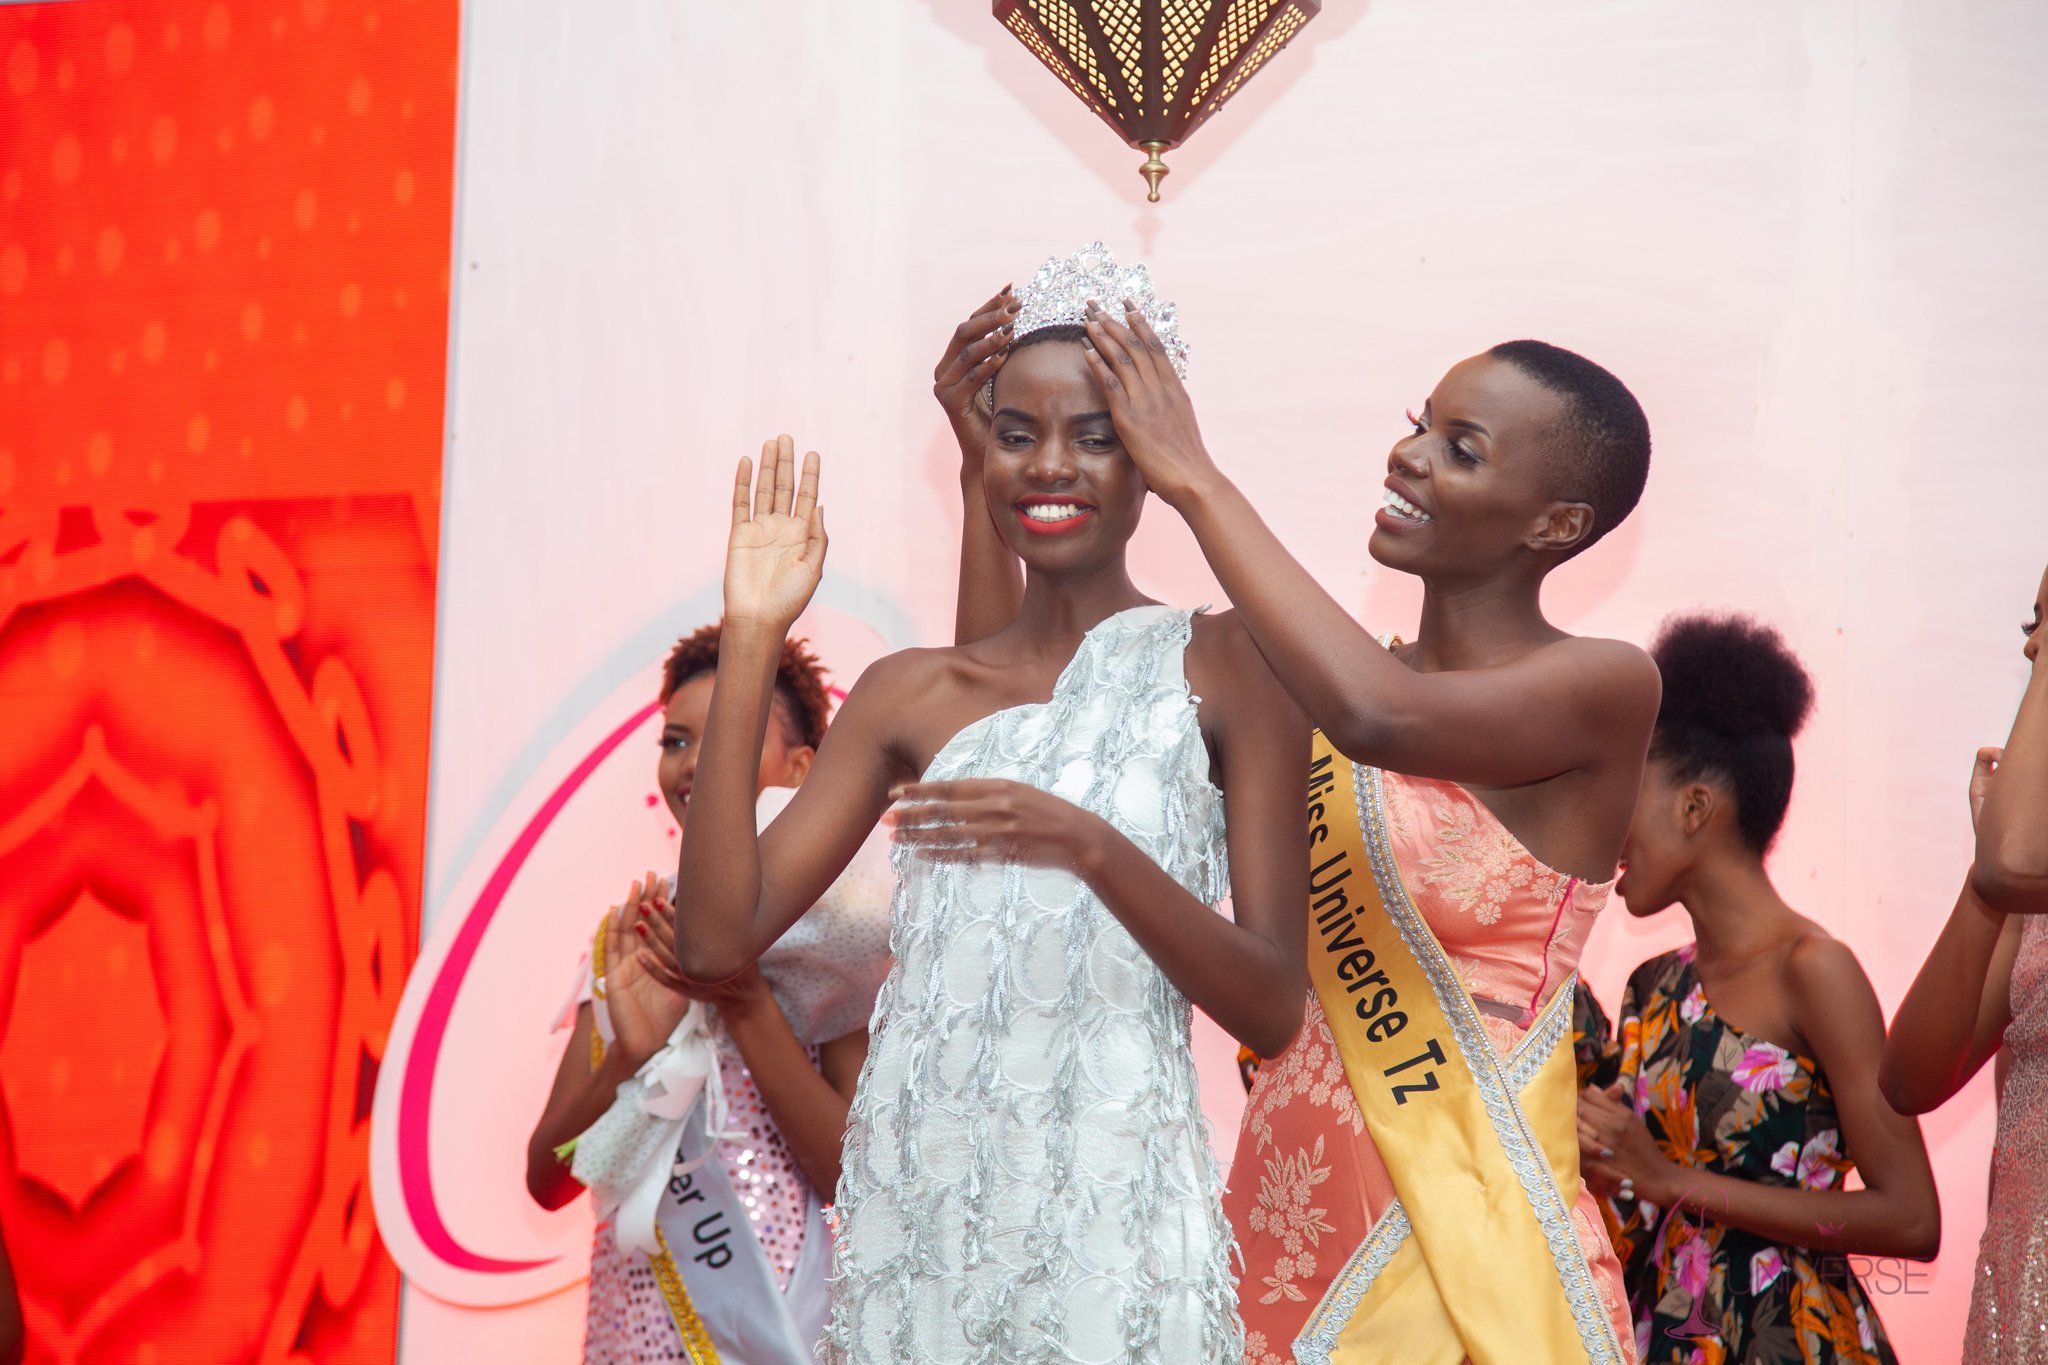 Dar es Salaam, Tanzania's Shubila Stanton to compete in Miss Universe 2019